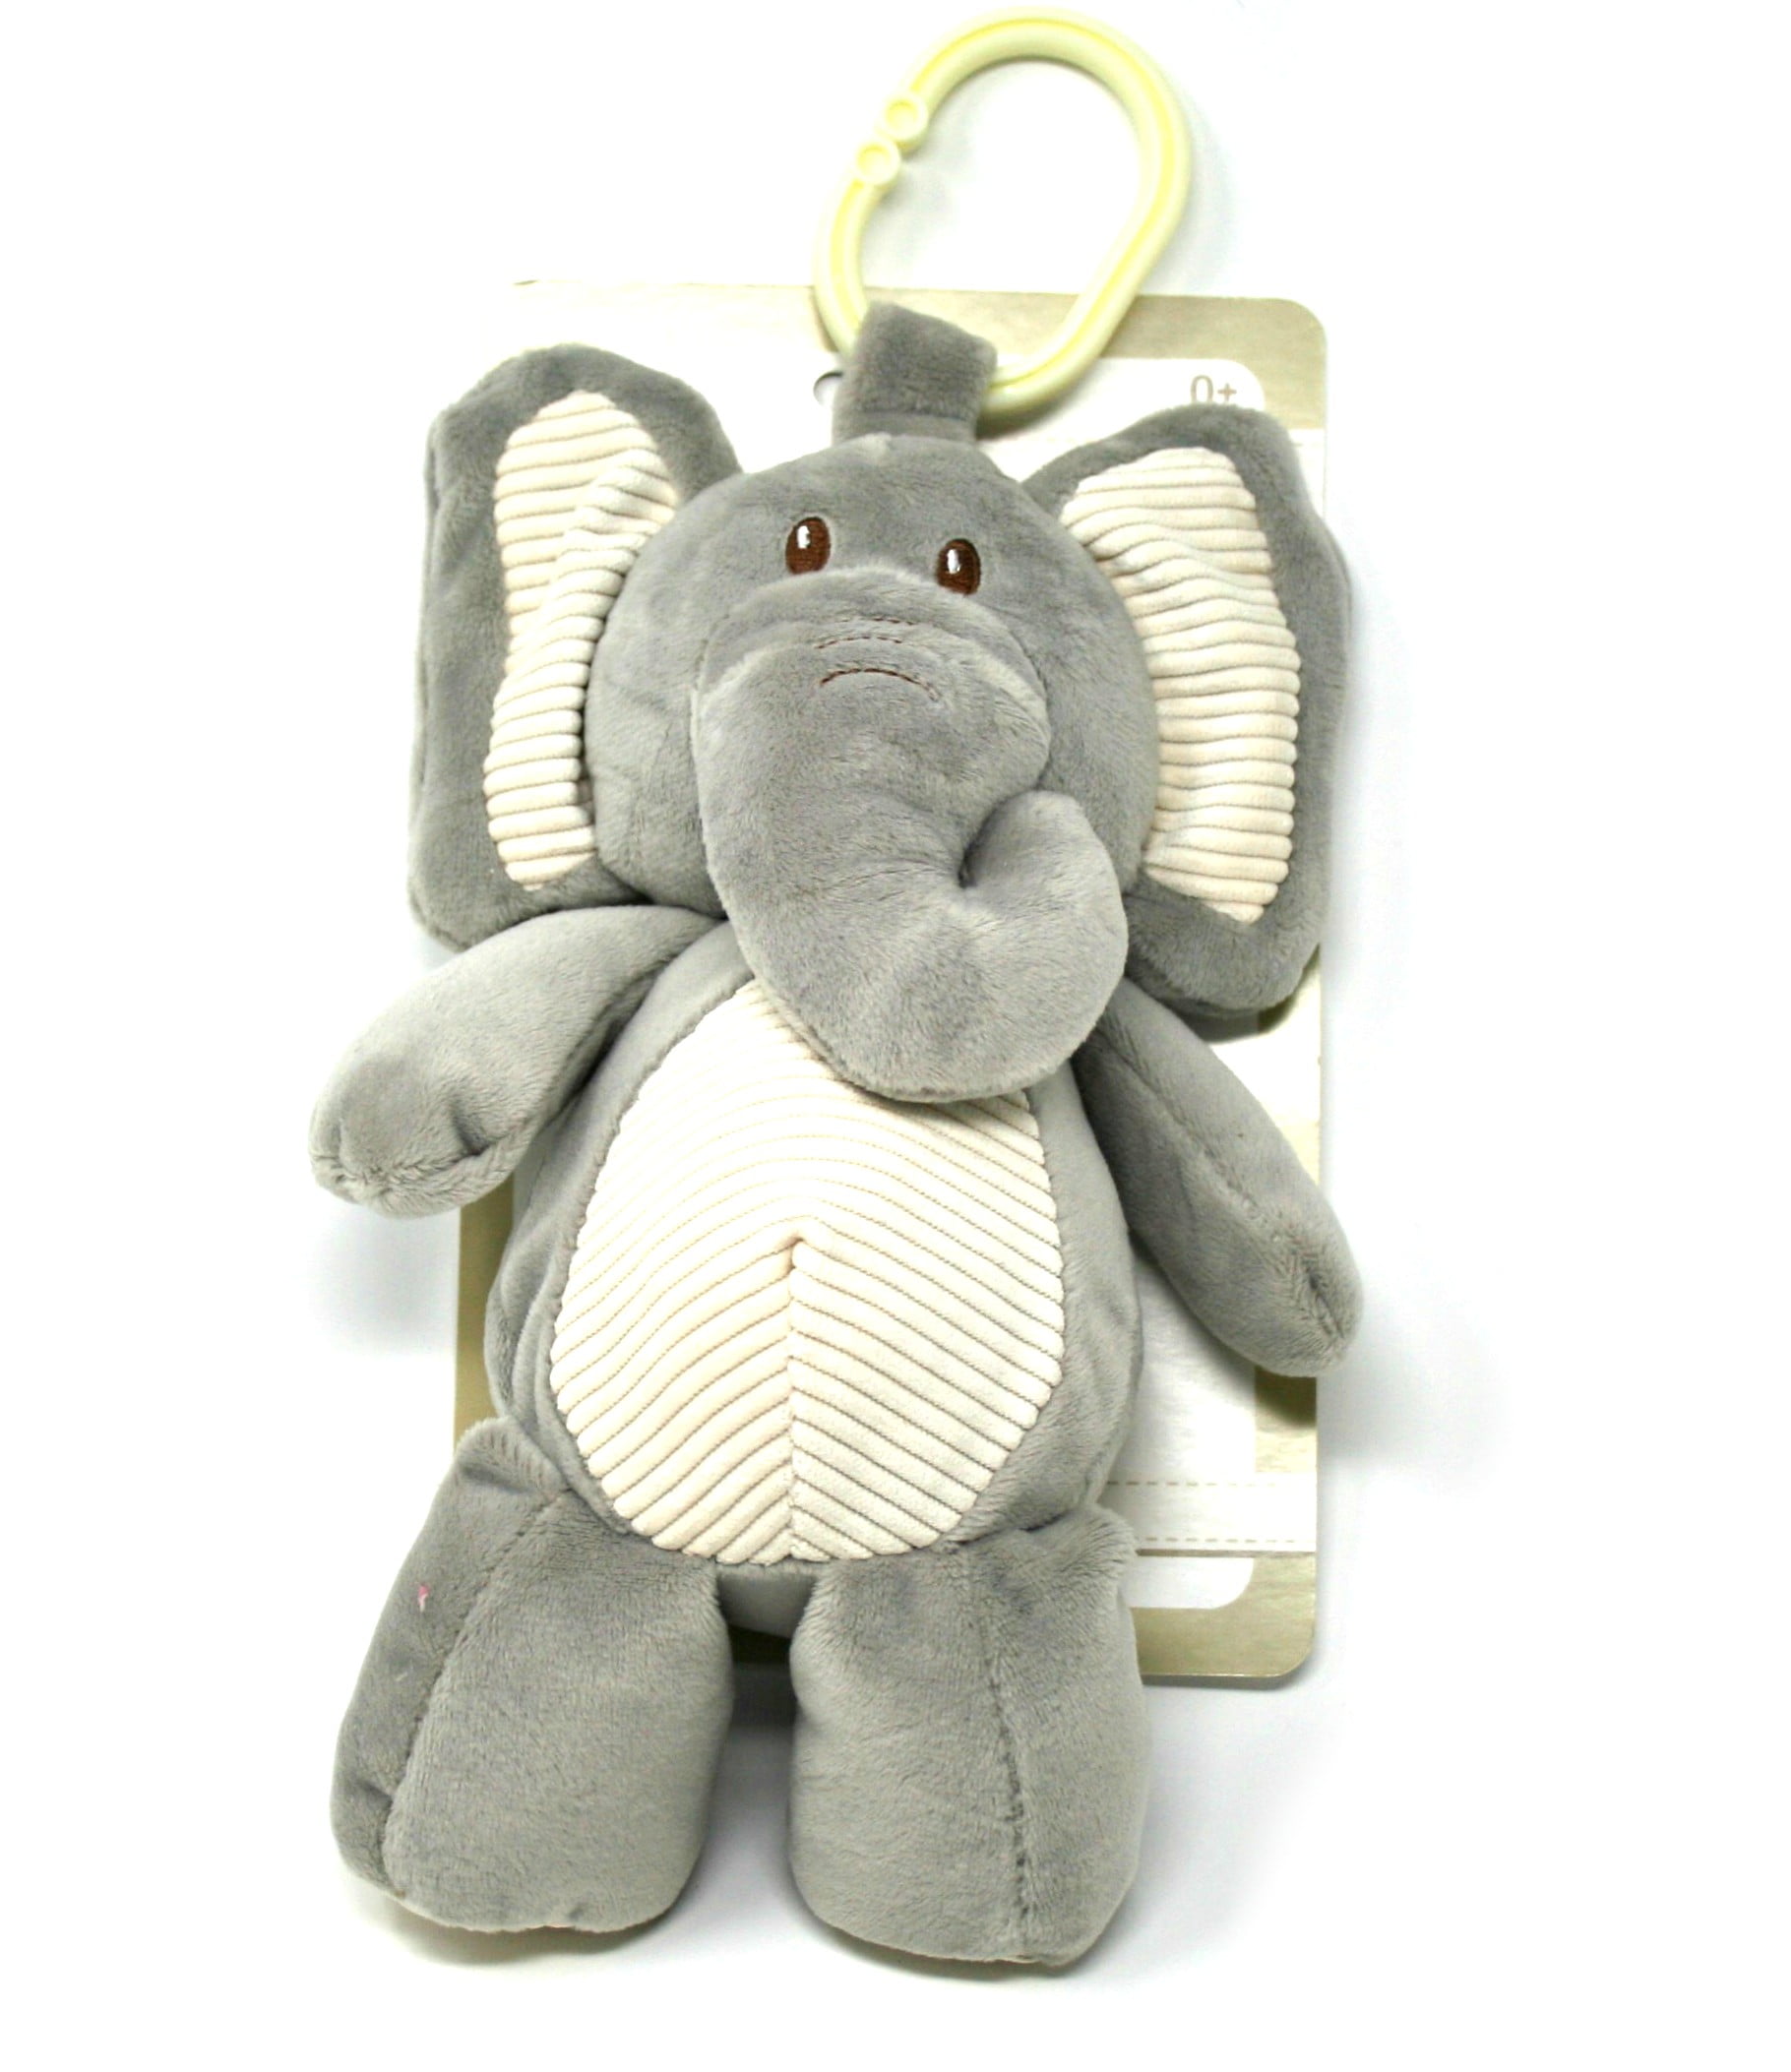 20" JUMBO ELEPHANT RATTLE Baby Soft Toy Plush By Kellybaby BRAND NEW 